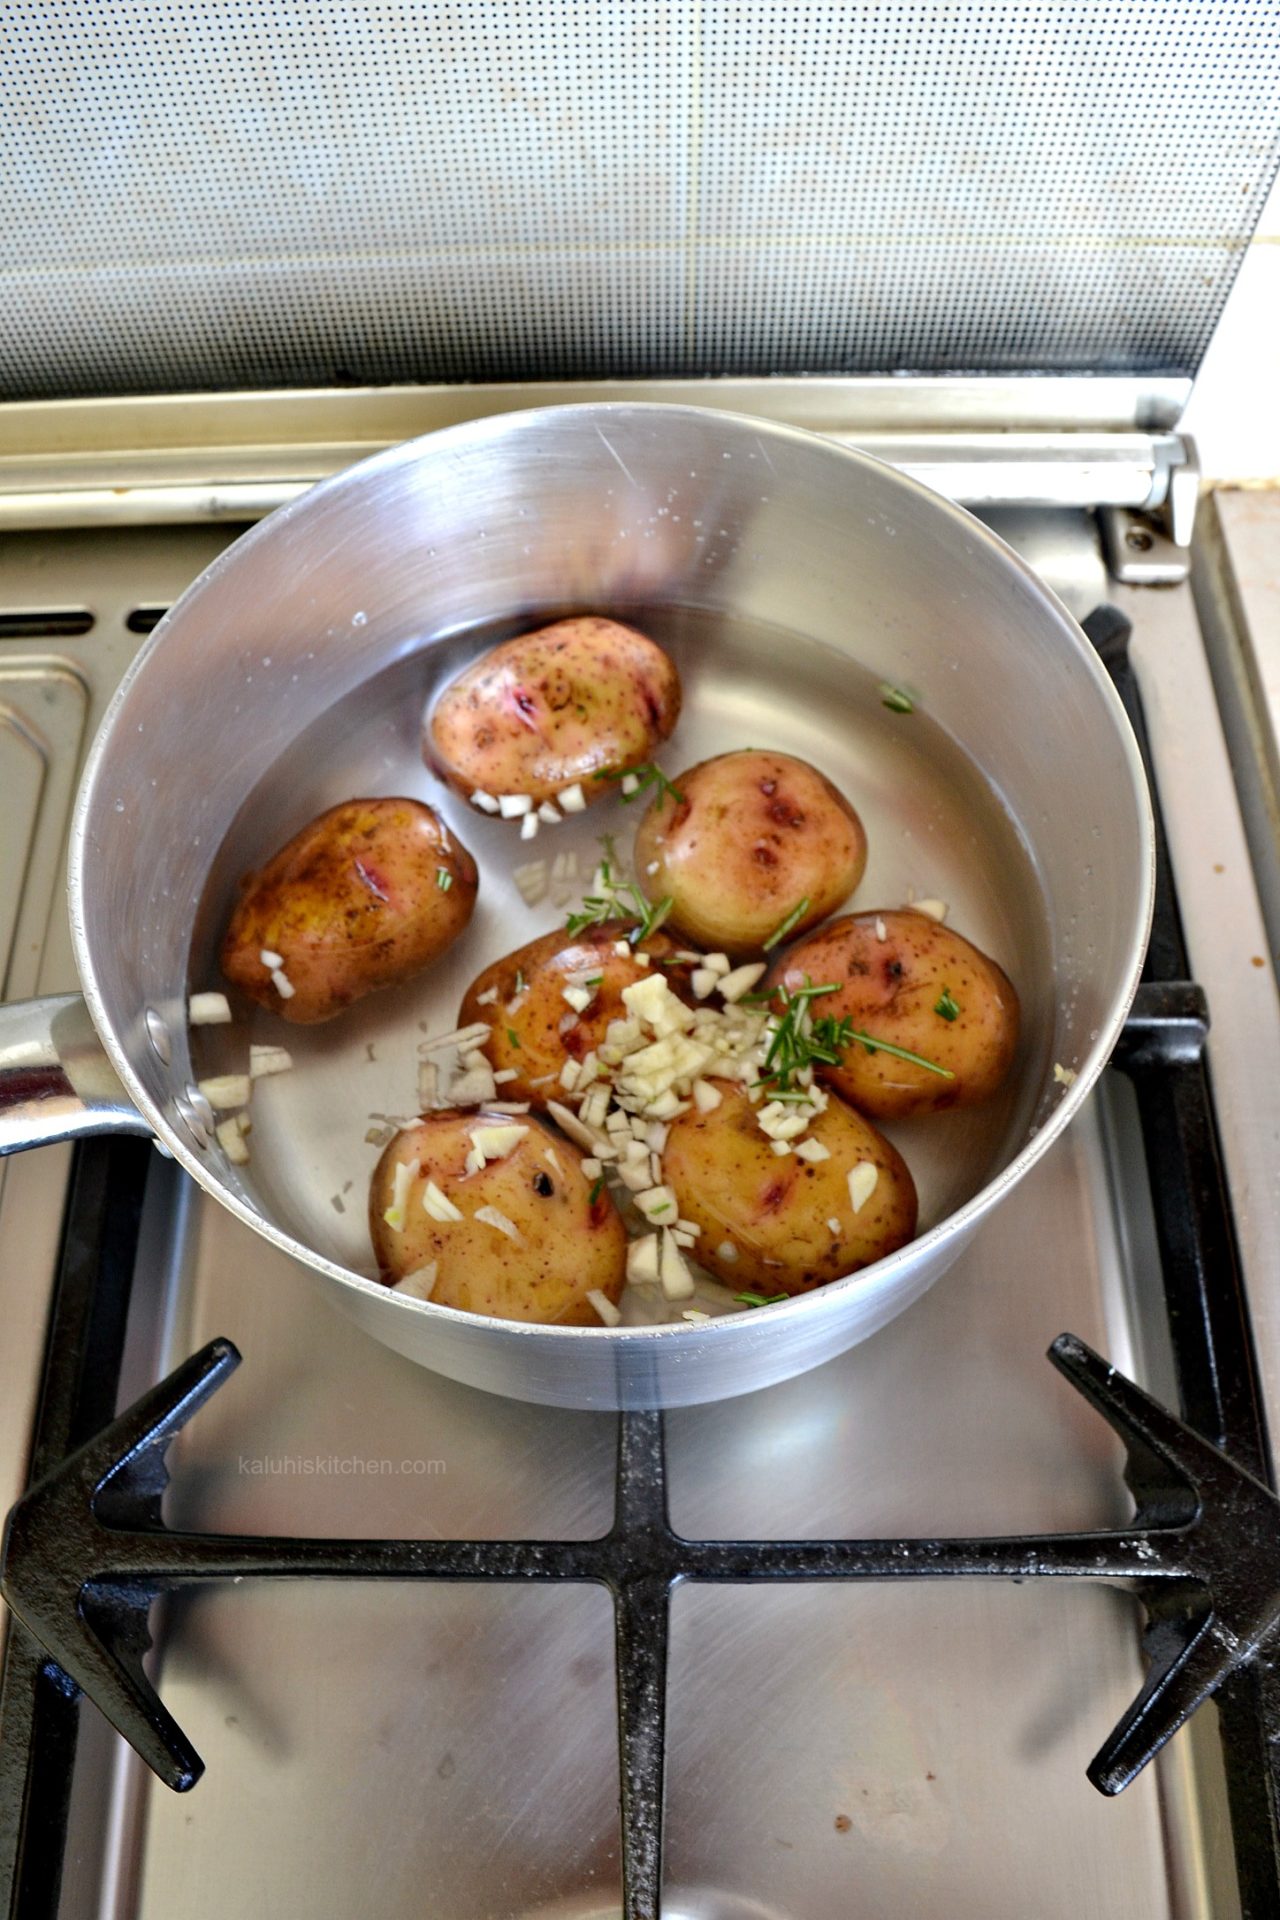 boiling potatoes with garlic and rosemary makes them alot more tasty and tasty_kaluhiskitchecn.com